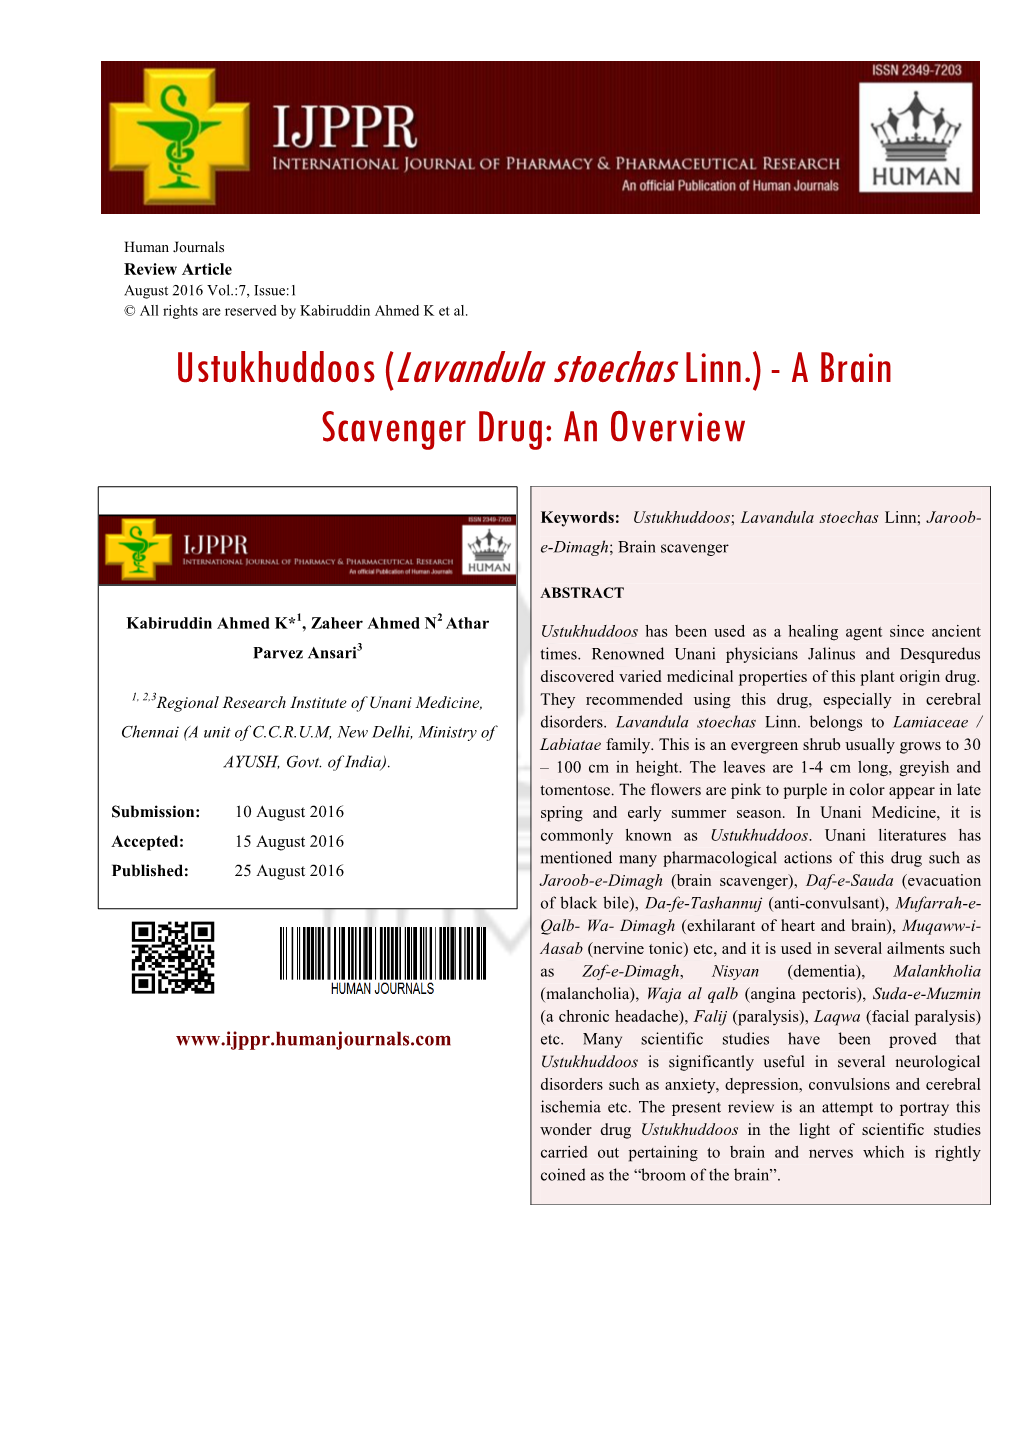 Ustukhuddoos (Lavandula Stoechas Linn.) - a Brain Scavenger Drug: an Overview